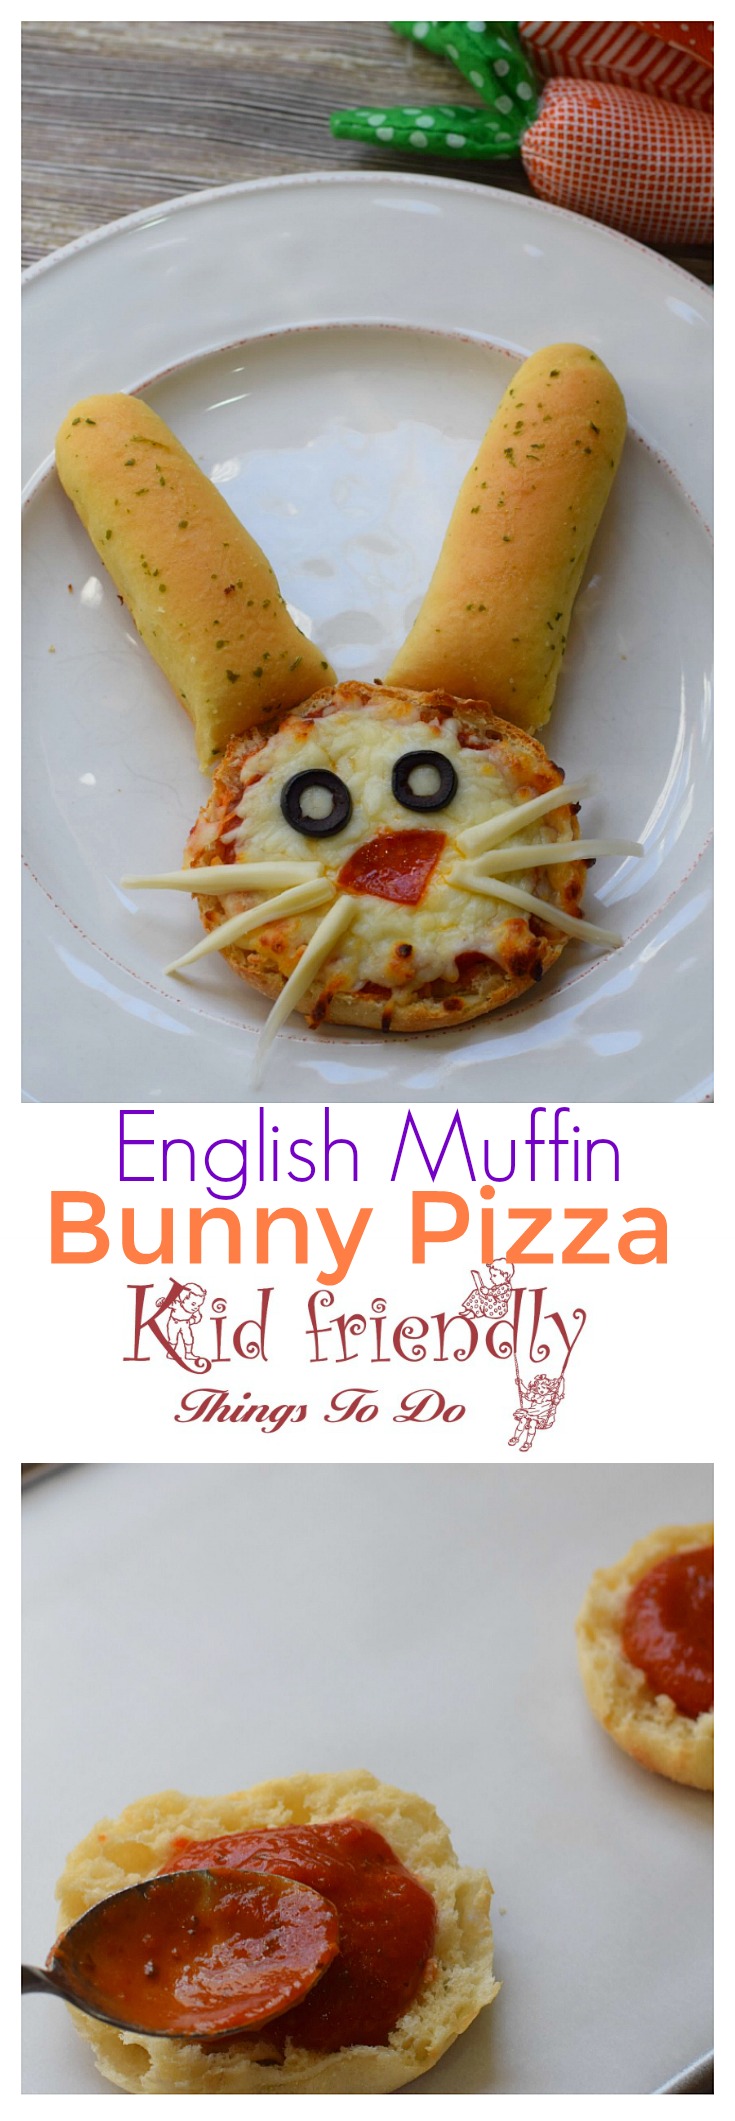 English Muffin Bunny Pizza for a Kid Friendly Fun Food Treat - Cute little bunny english muffin pizzas - www.kidfriendlythingstodo.com